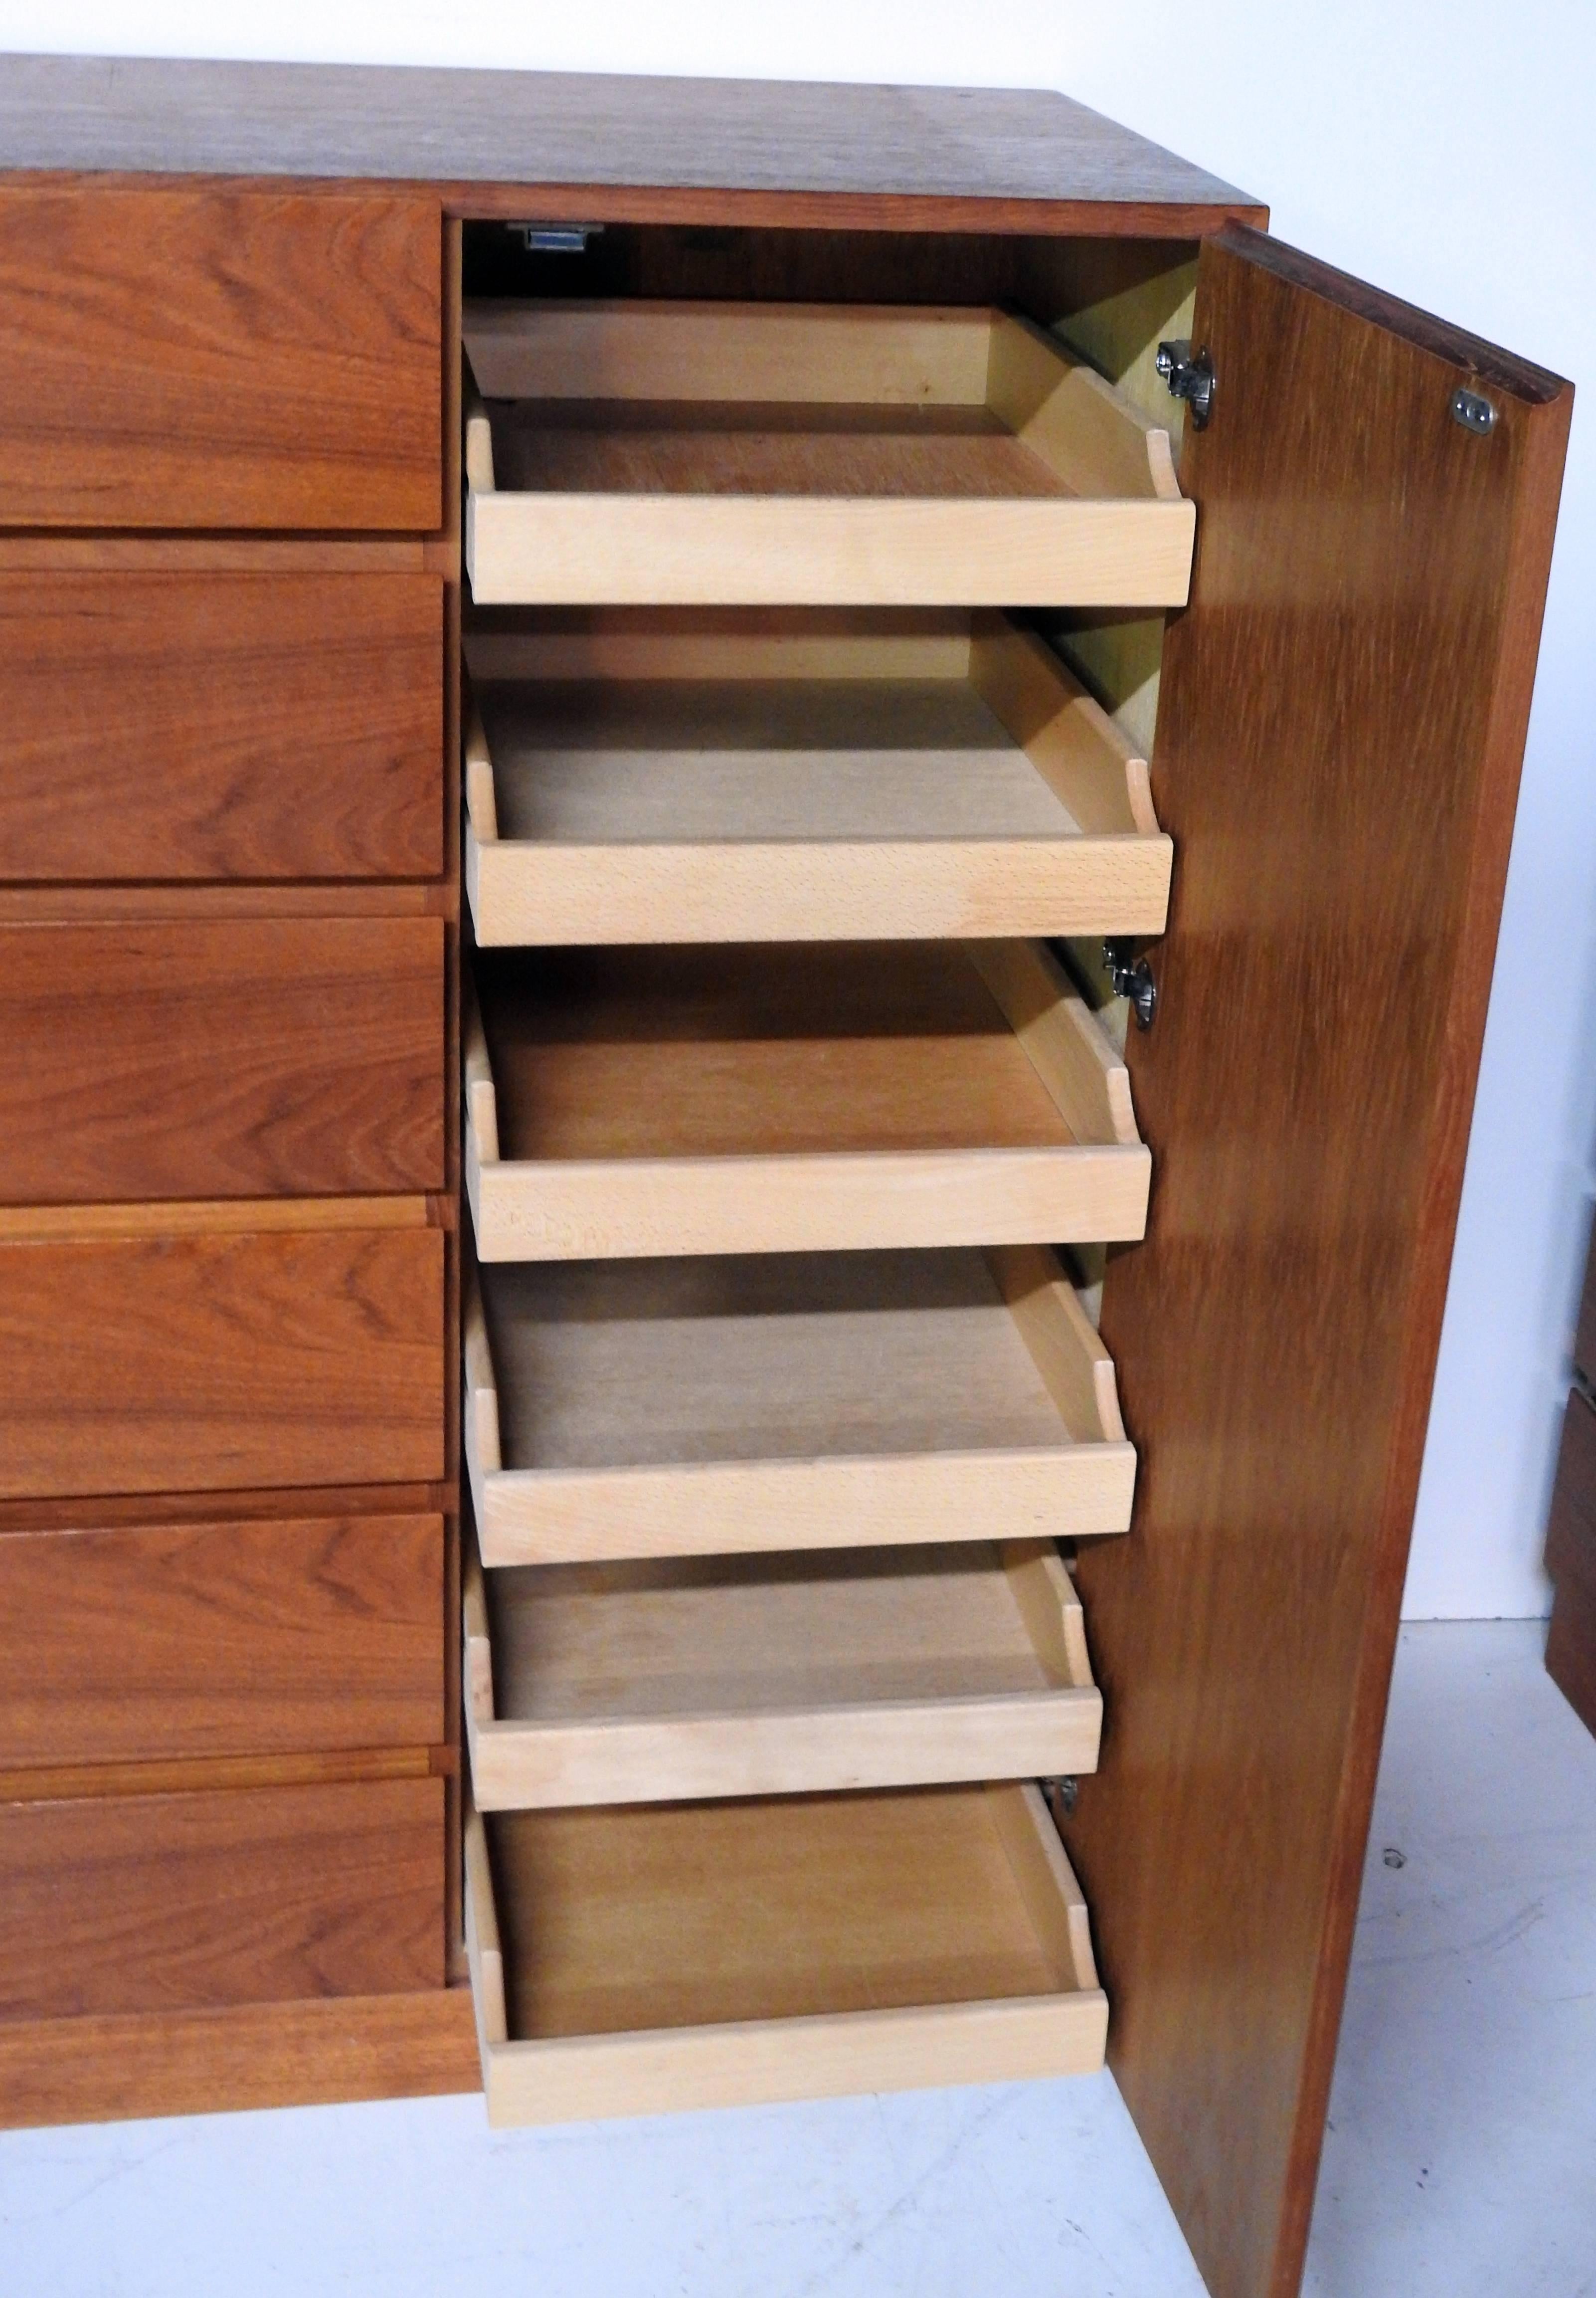 Teak Danish chiffonier by Vinde Mobelfabrik with six drawers and six drawers behind door.